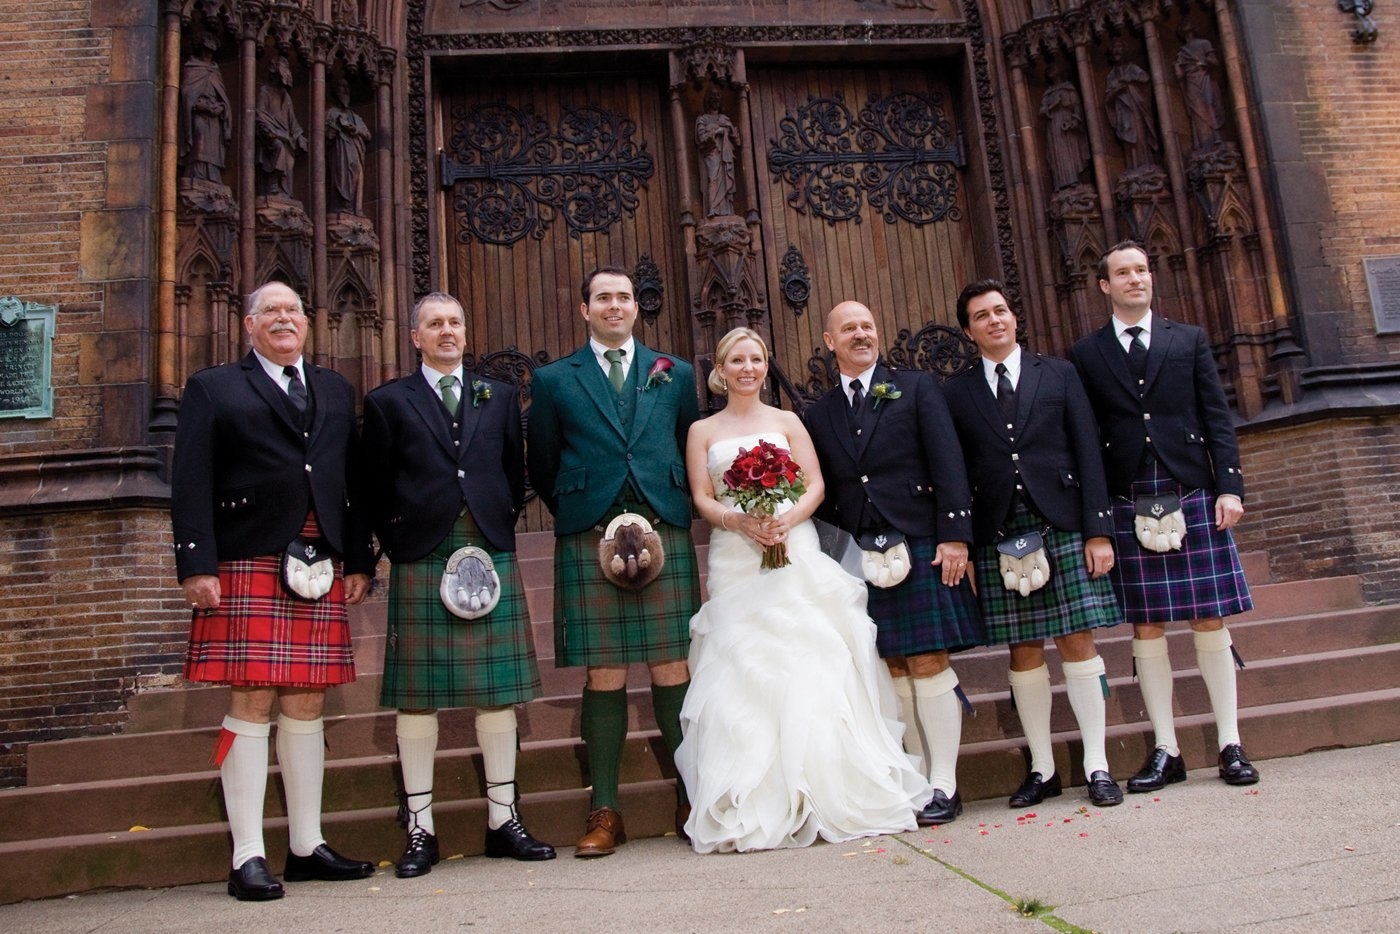 Irish traditions. Свадьба в Шотландии. Свадебная церемония в Шотландии. Свадьба в Шотландии традиции. Свадебные традиции в Шотландии.